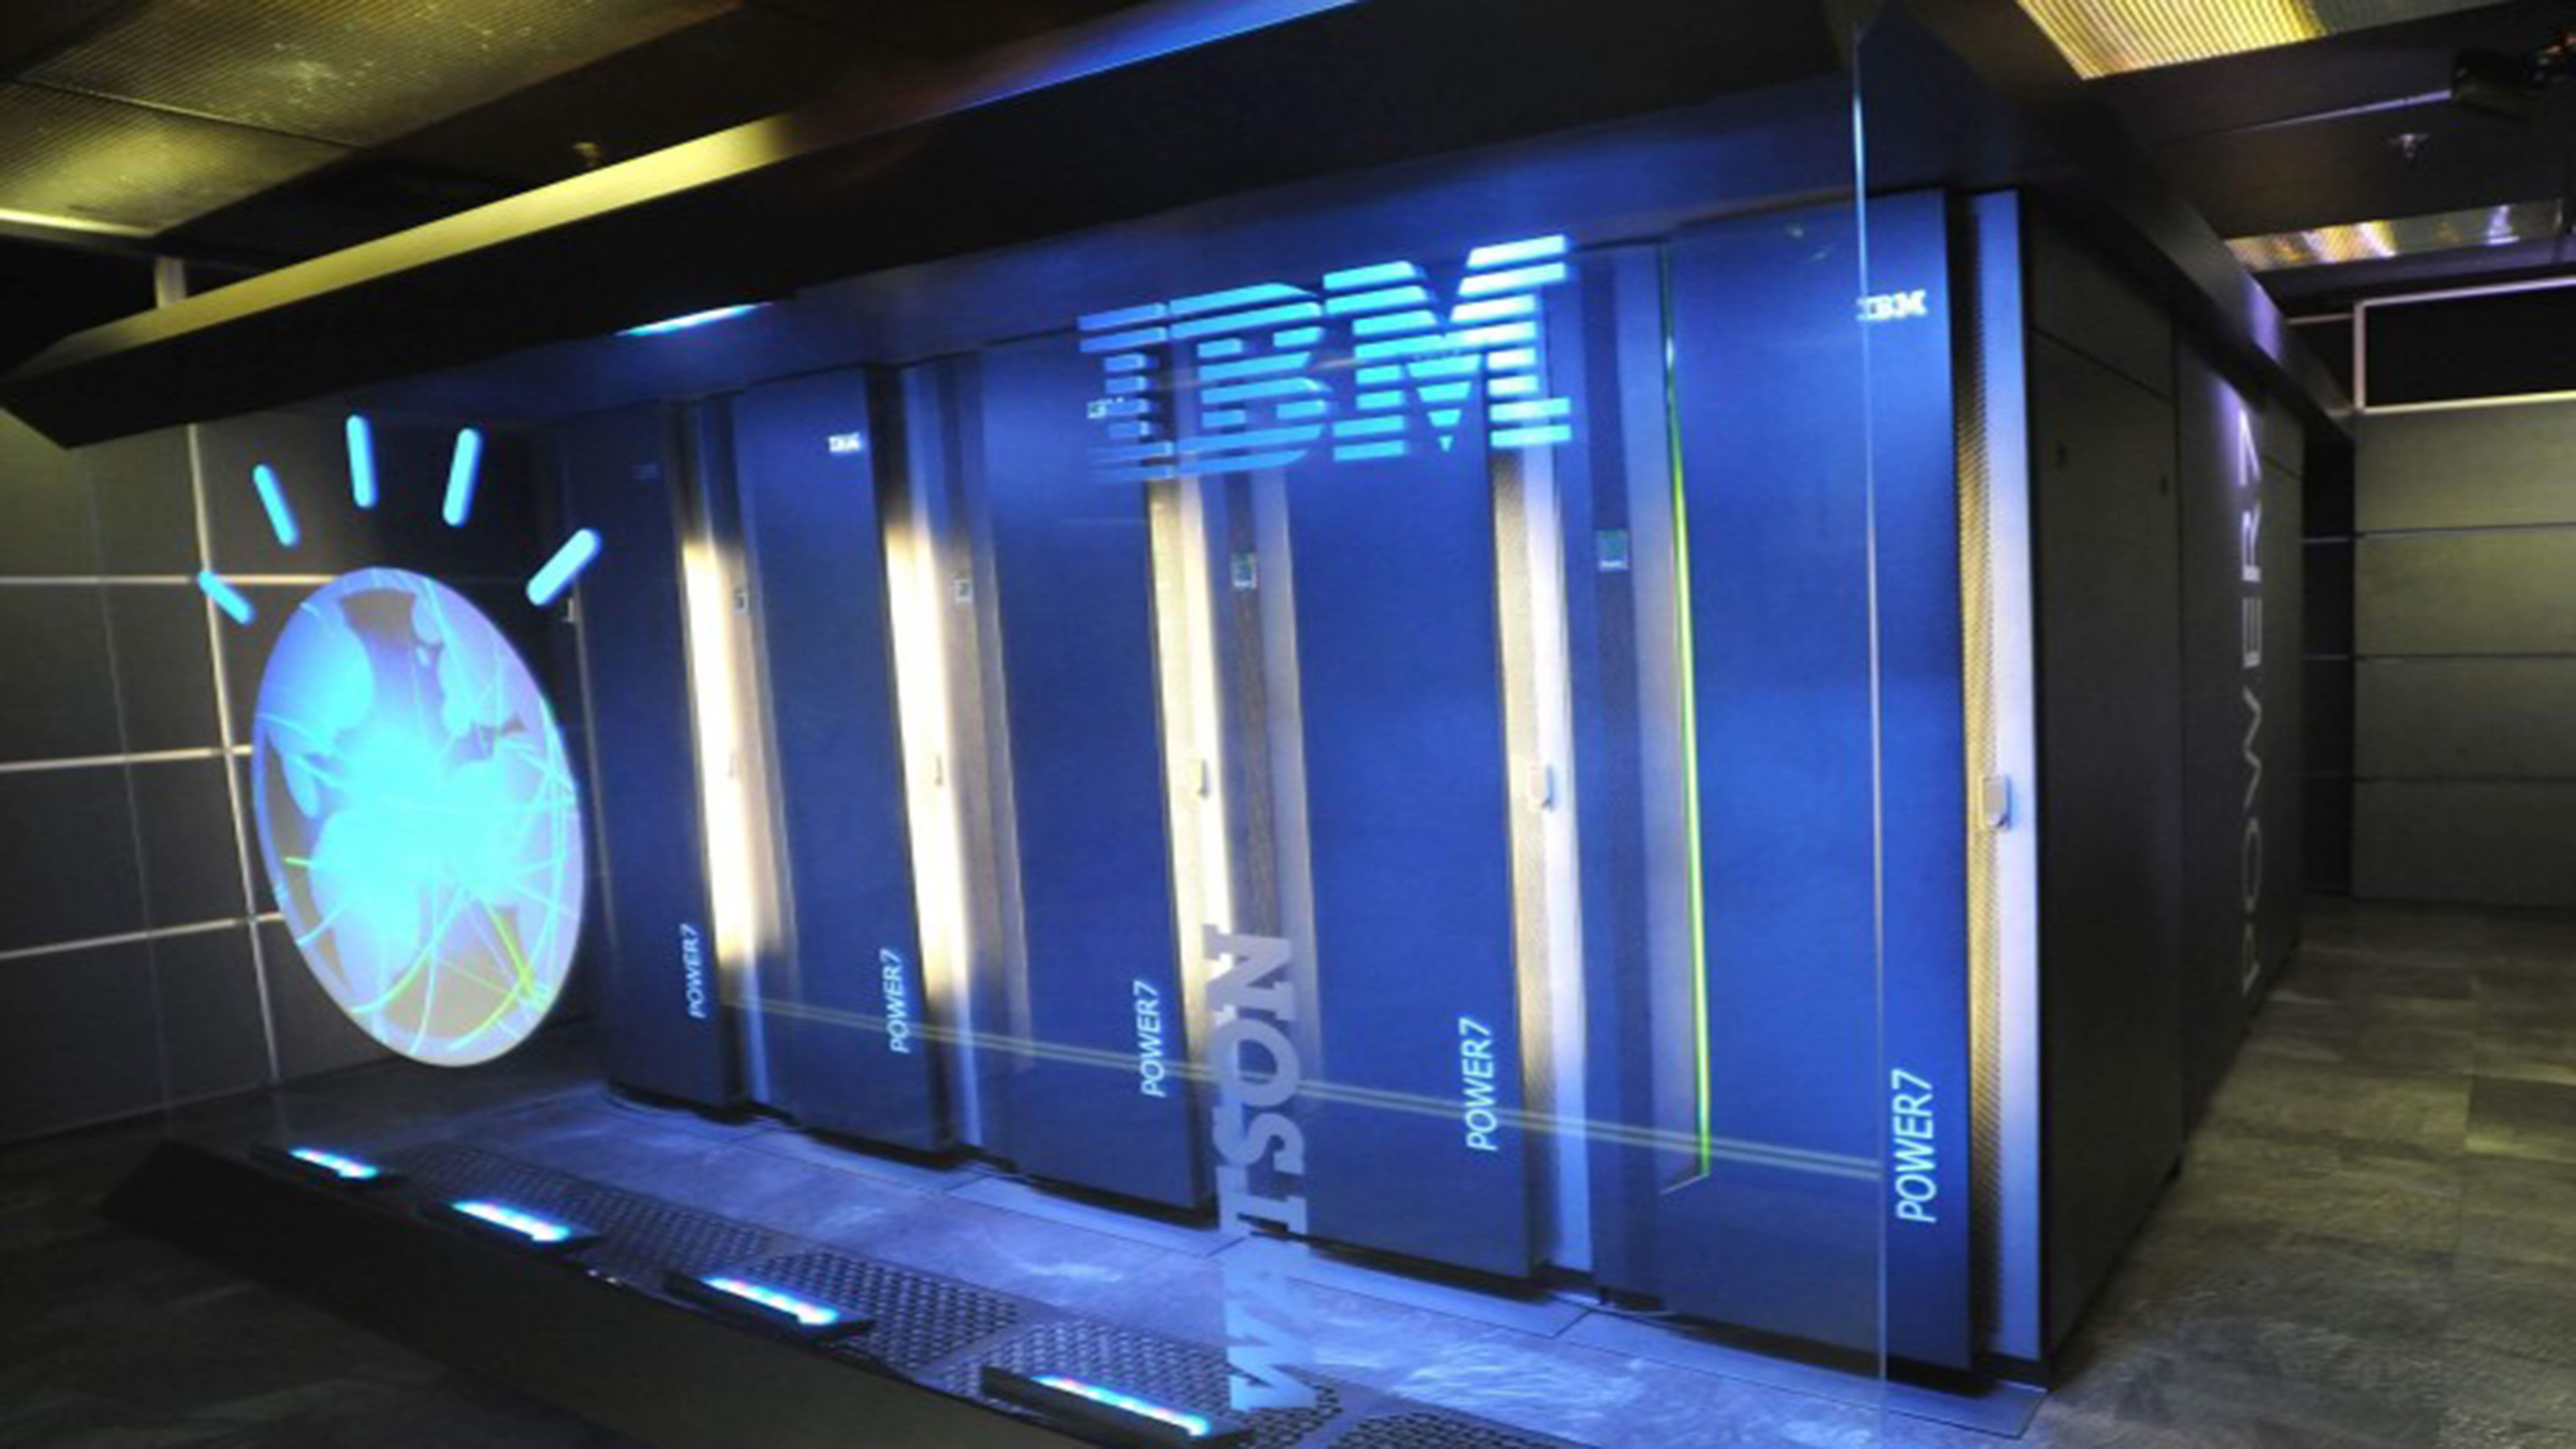 IBM Watson's AI  features seamless automation capabilities photo from Analytics India Magazine